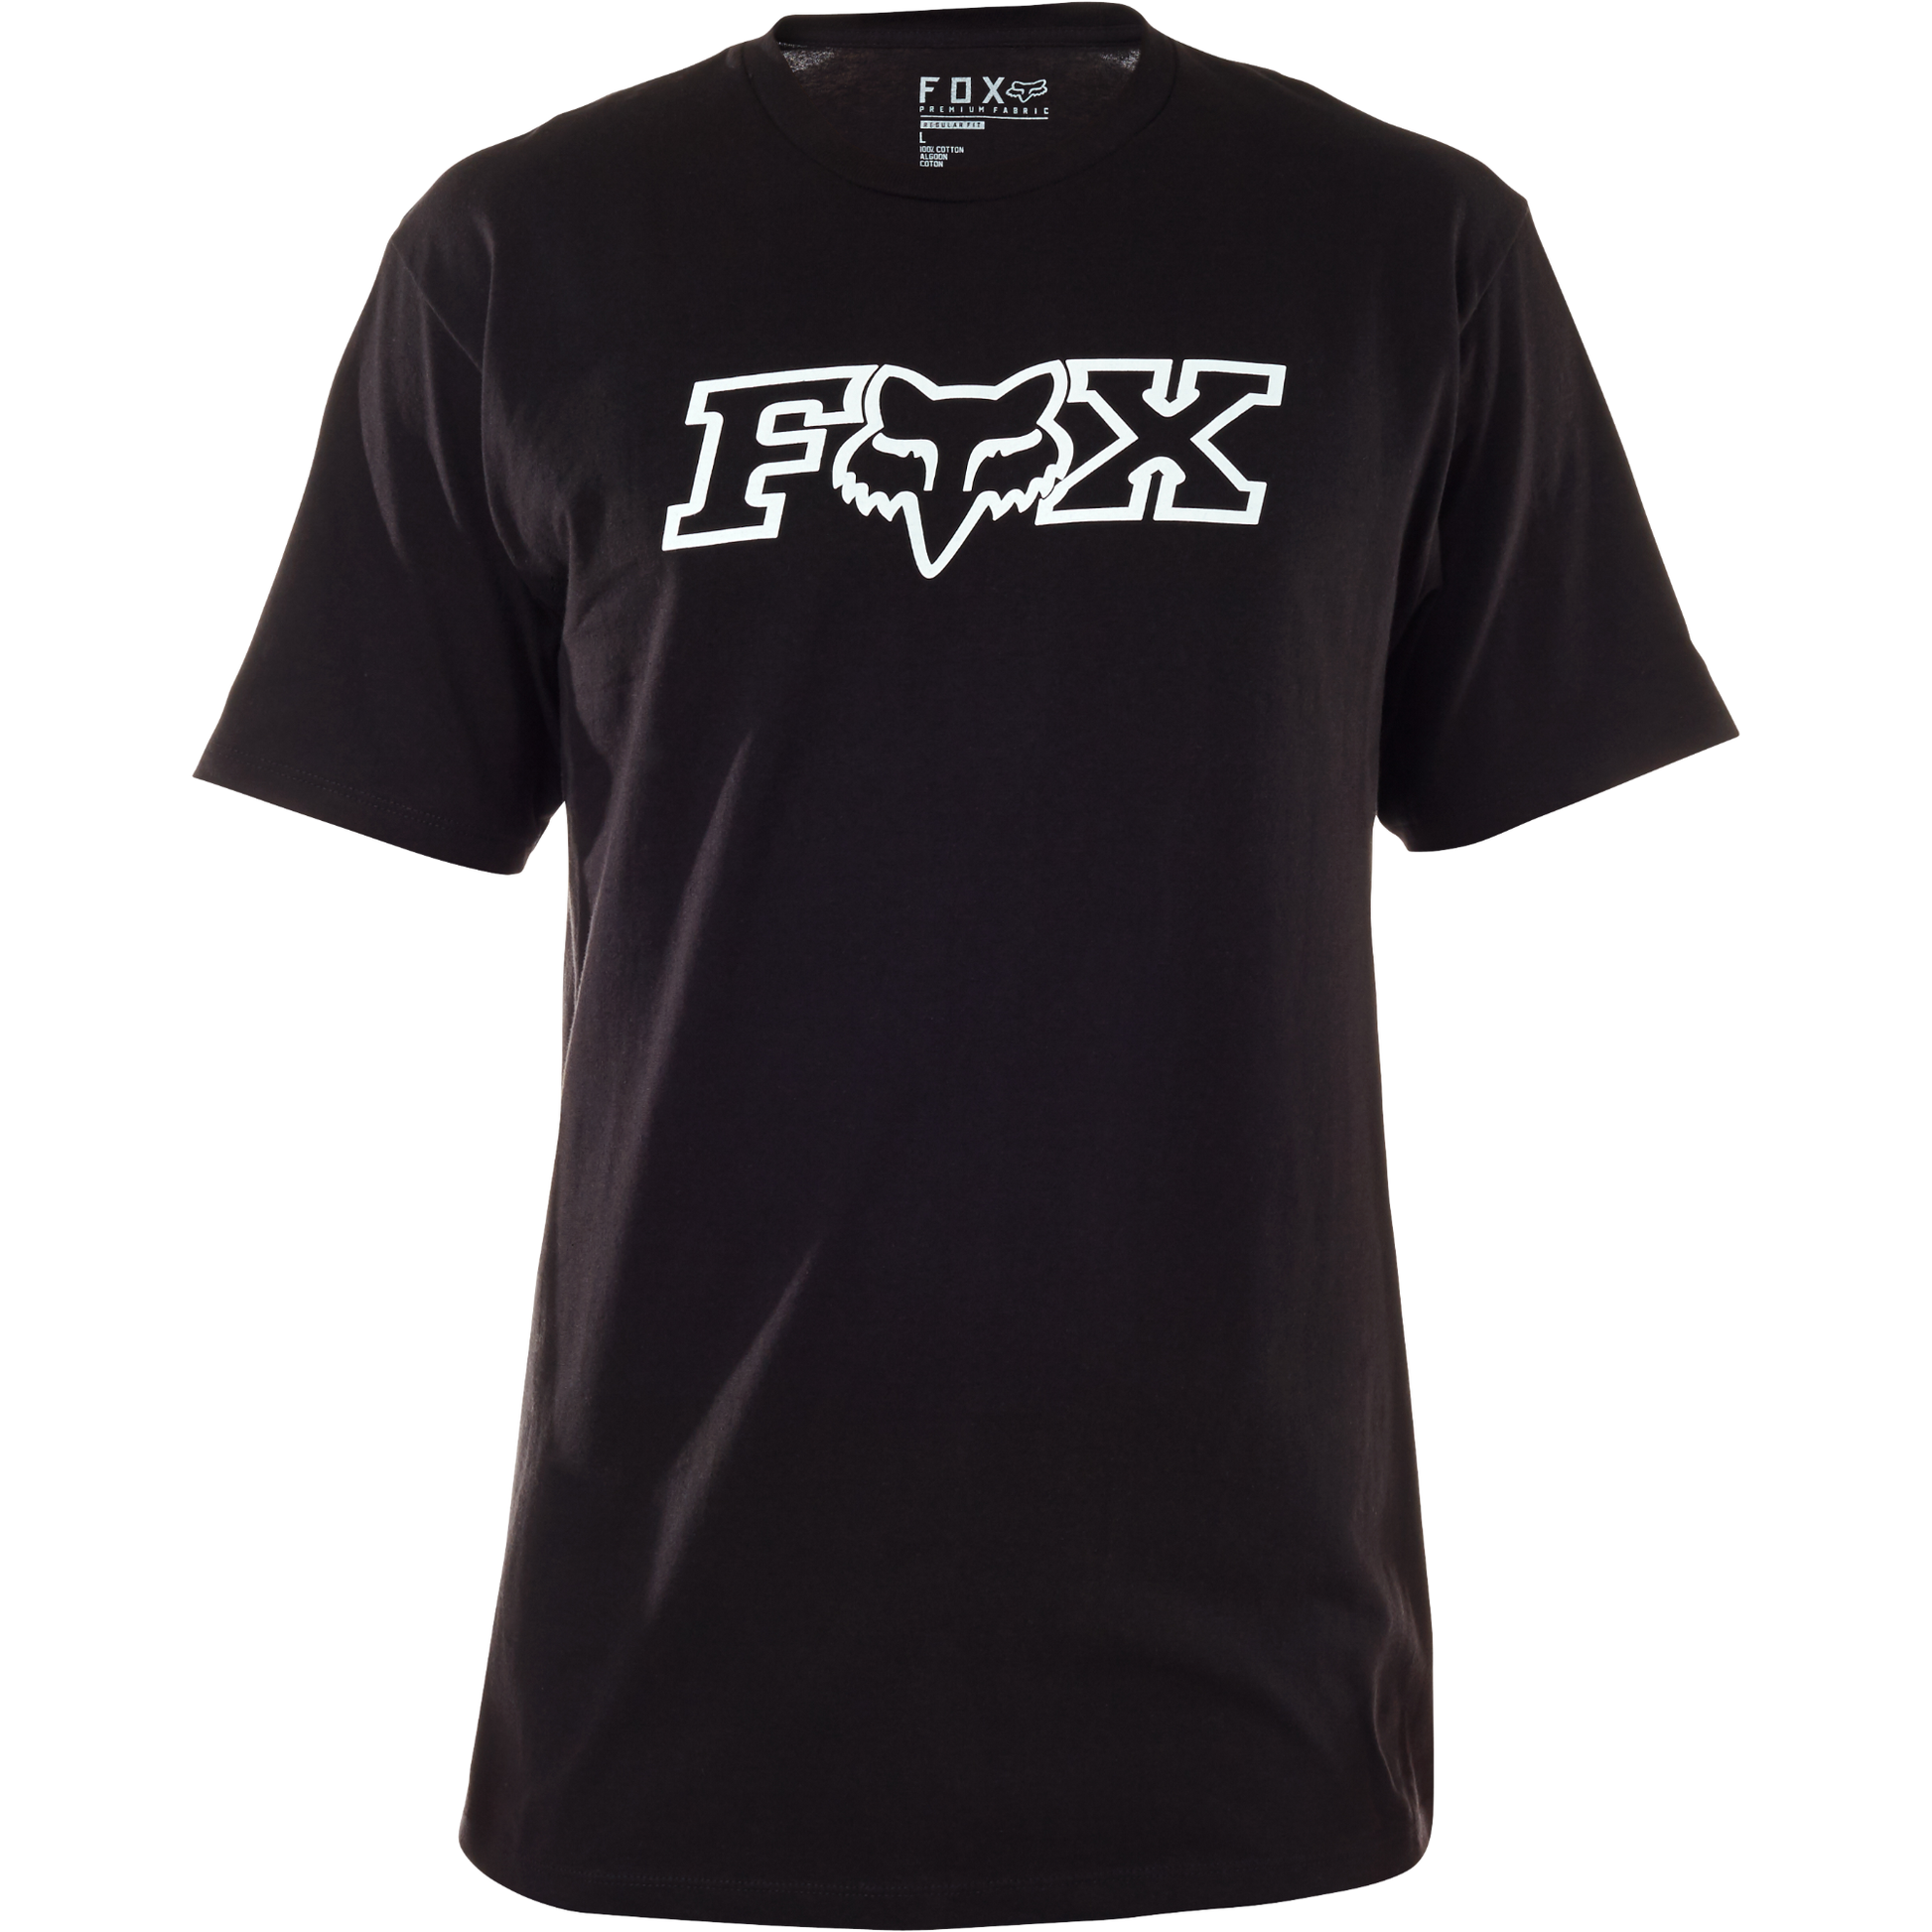 Fox Racing Legacy Tee Black Large - ExtremeSupply.com